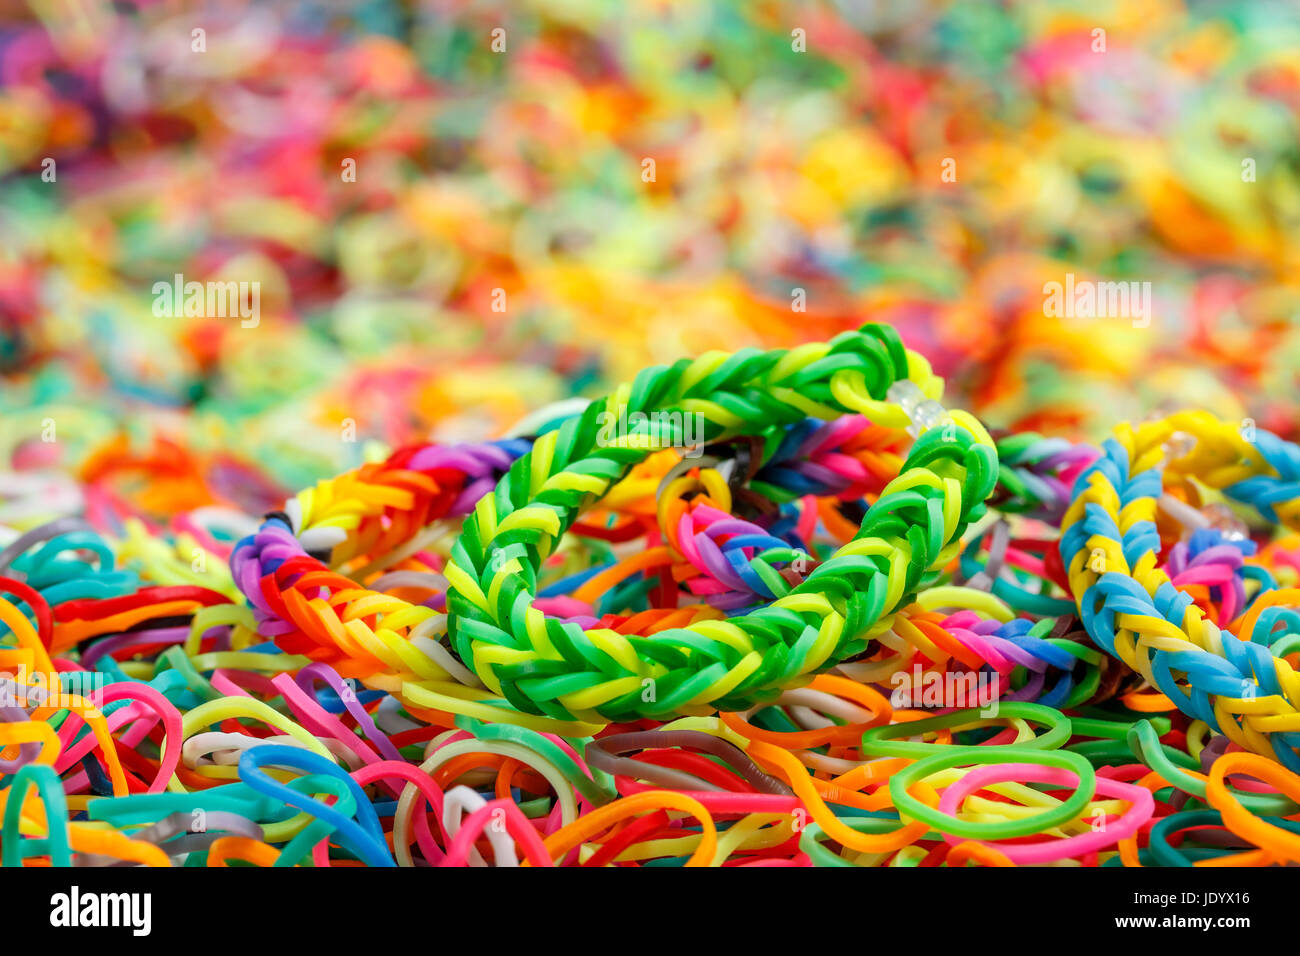 Colorful Rainbow loom bracelet rubber bands Stock Photo - Alamy